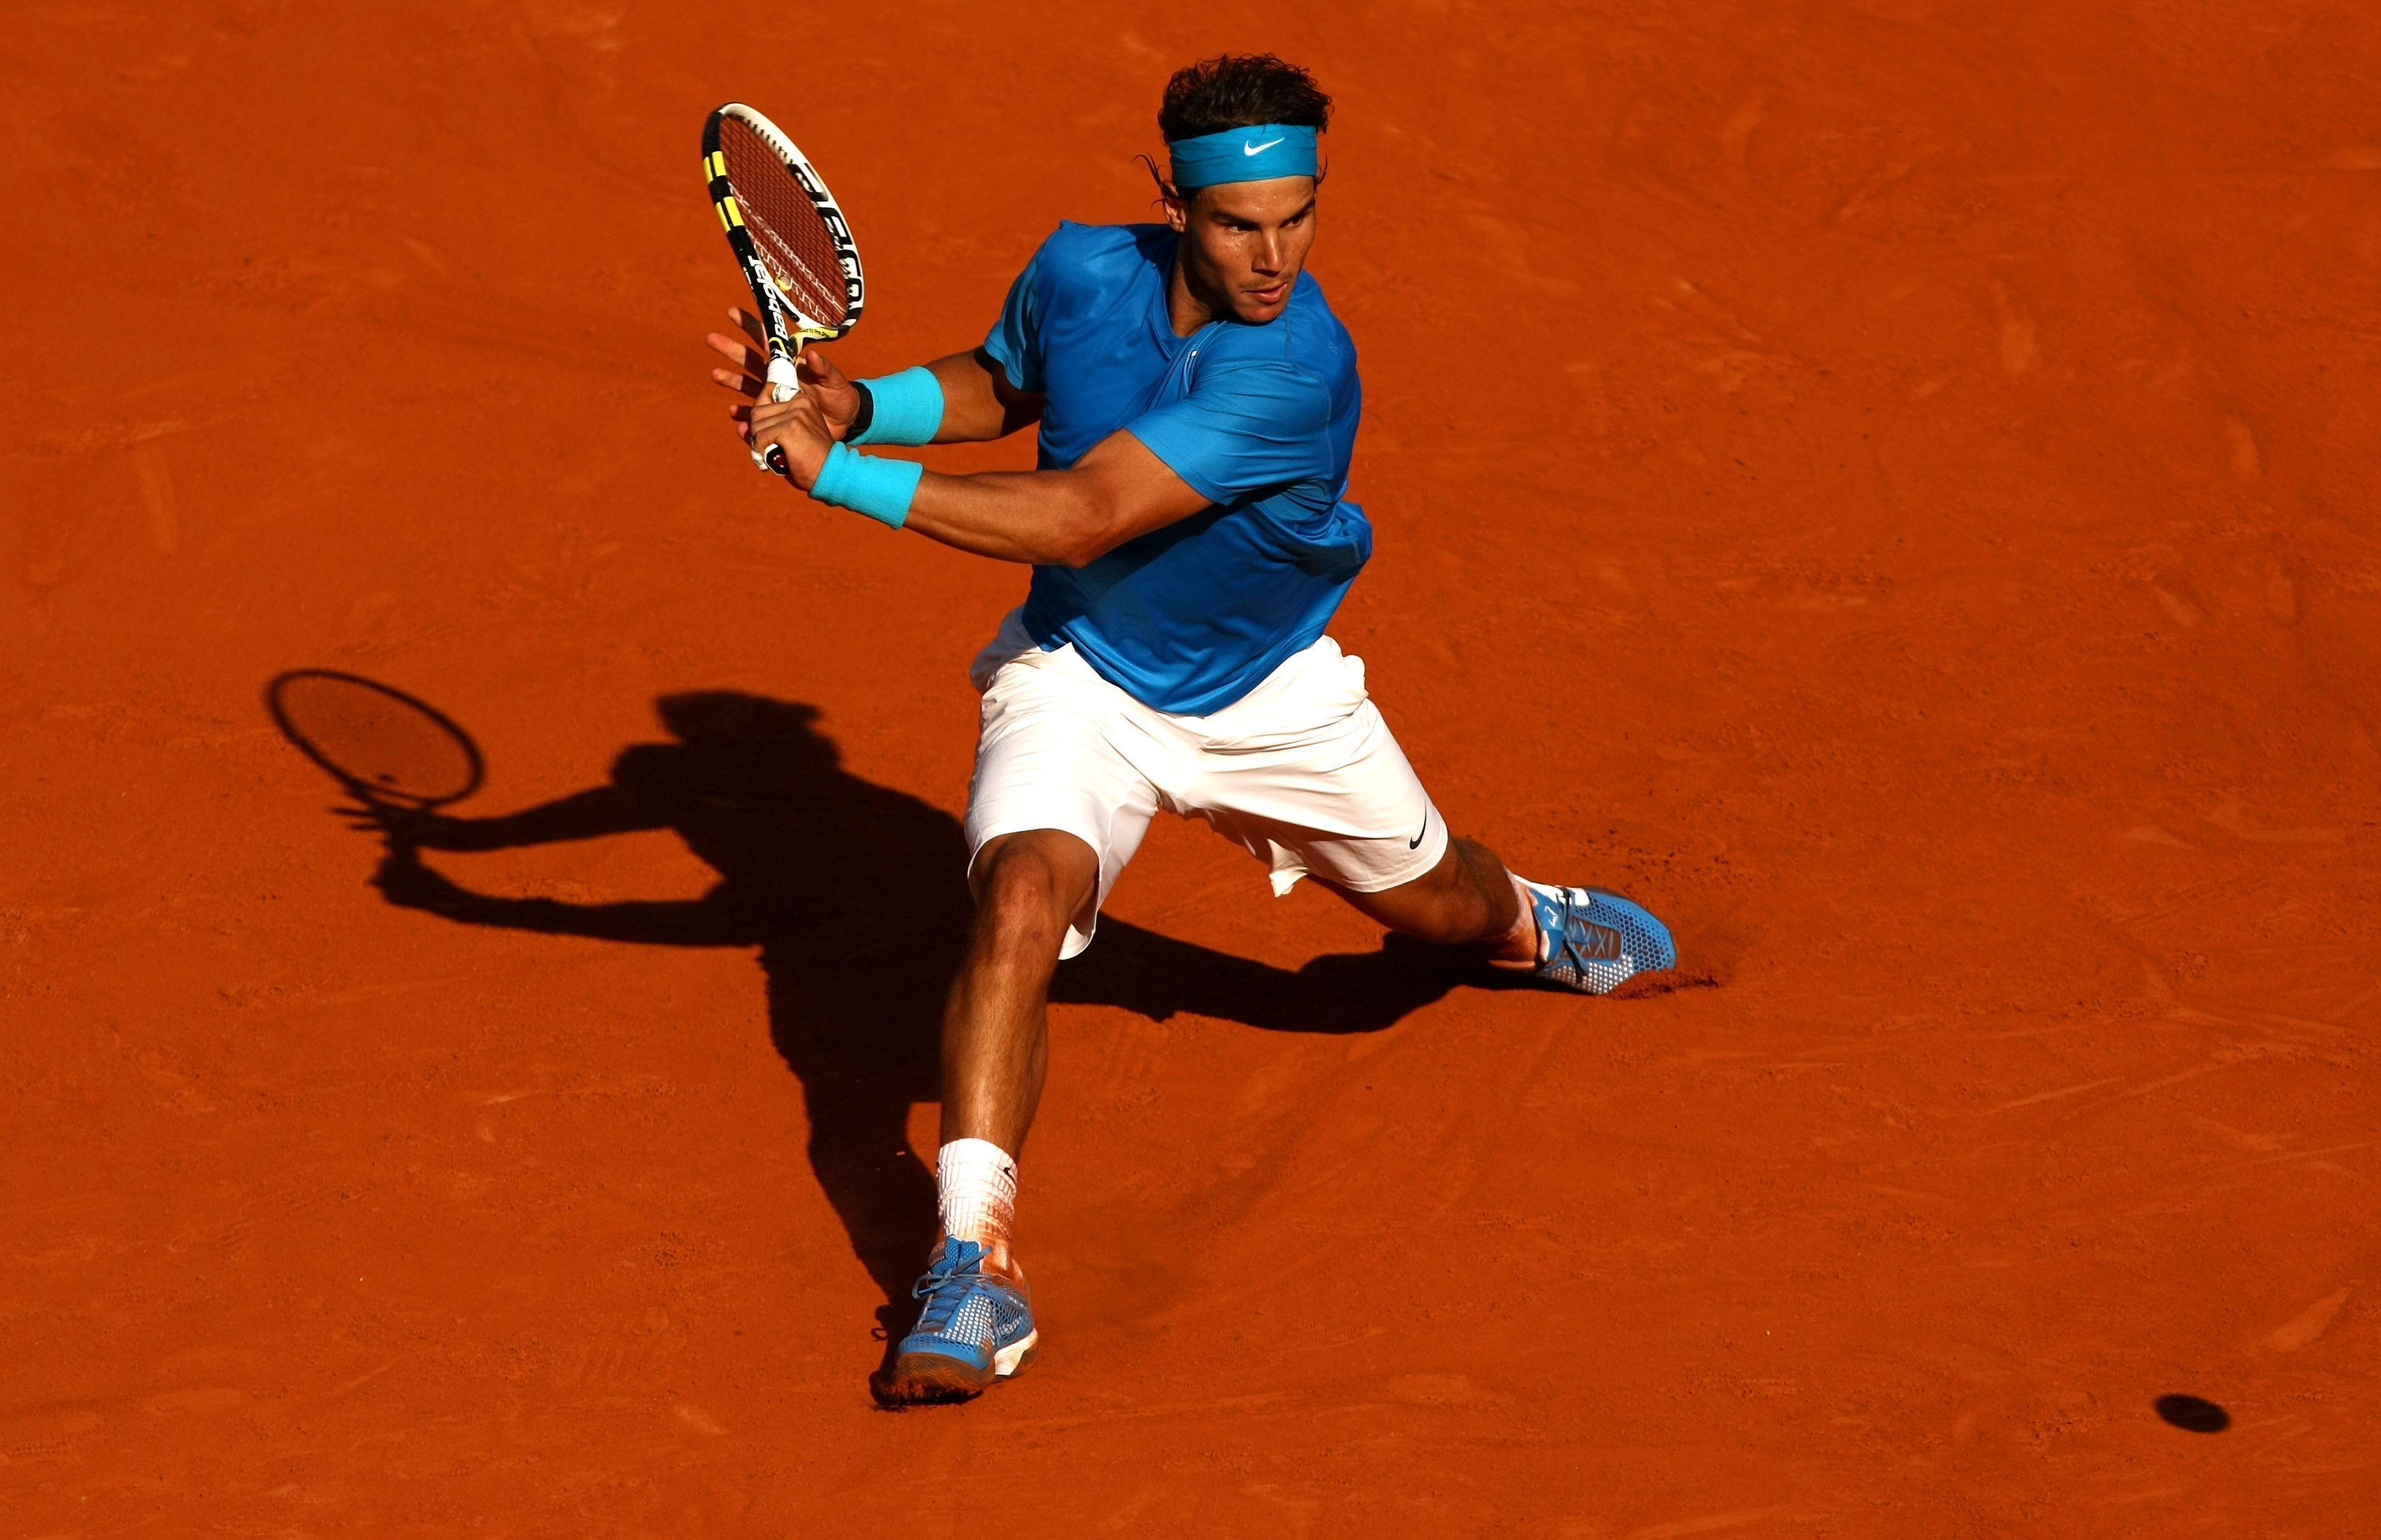 More Image of Rafael Nadal Playing the Final at Roland Garros